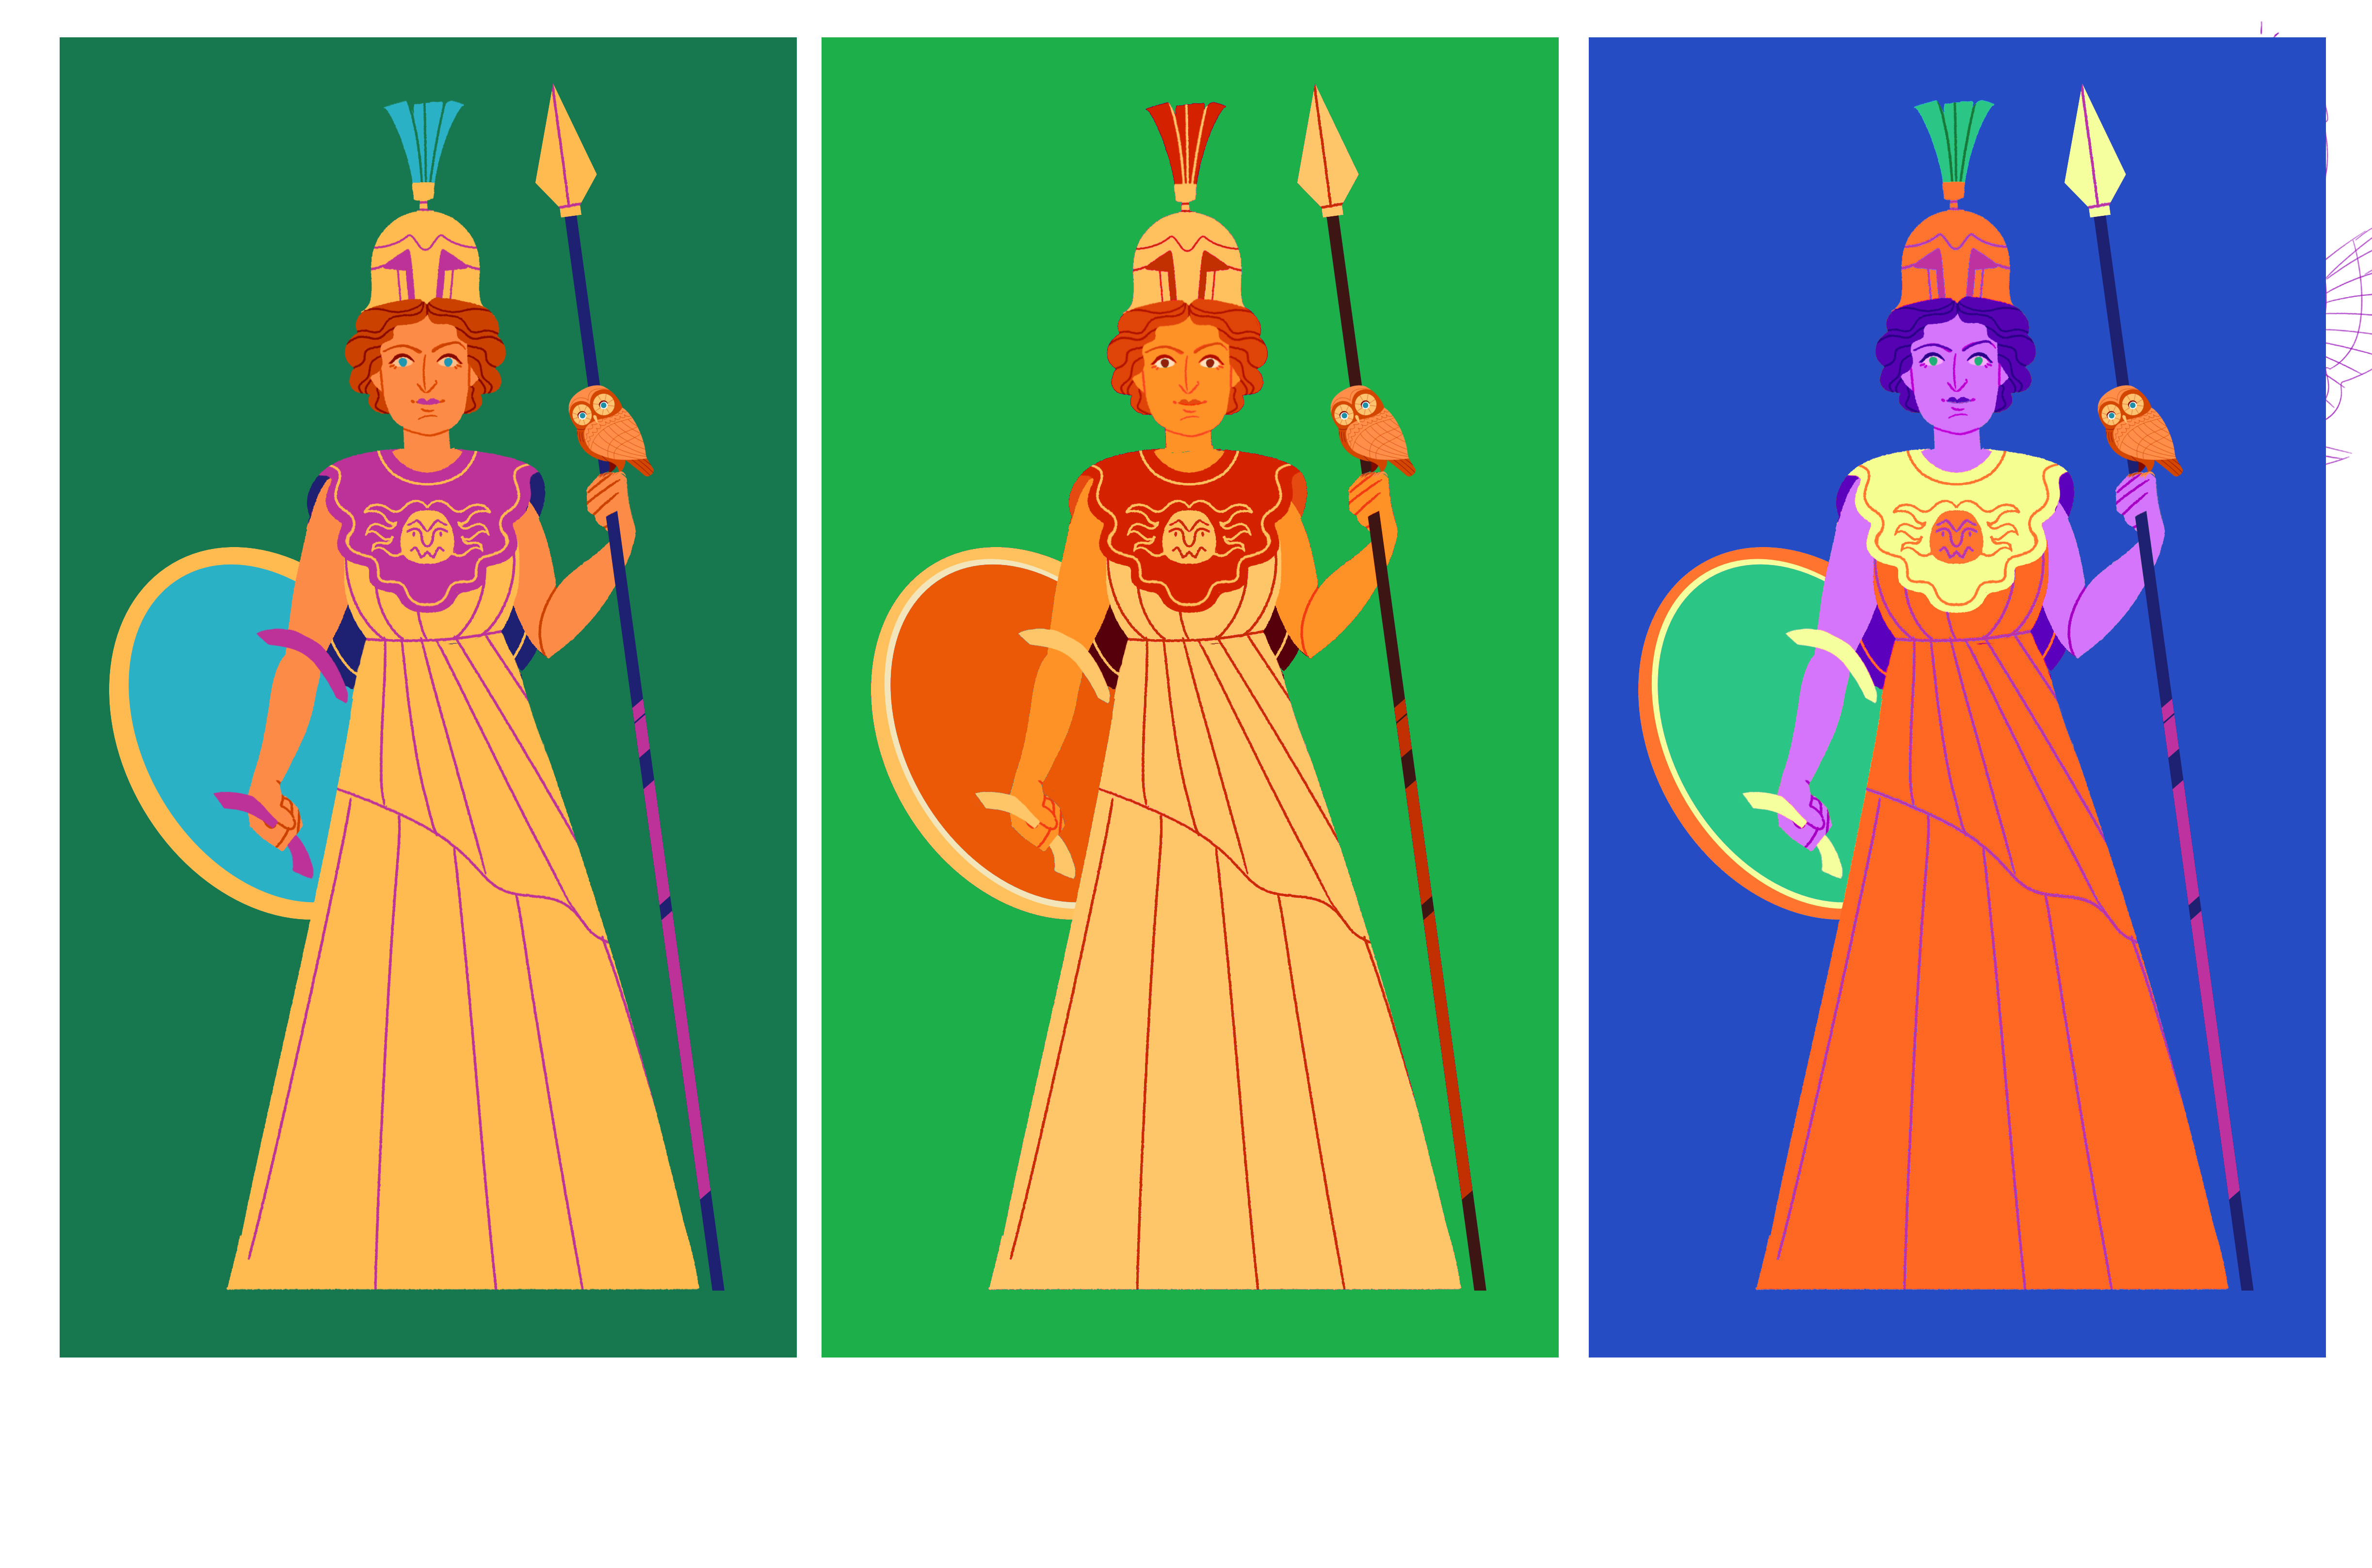 Flora's illustrations of the Goddess Minerva